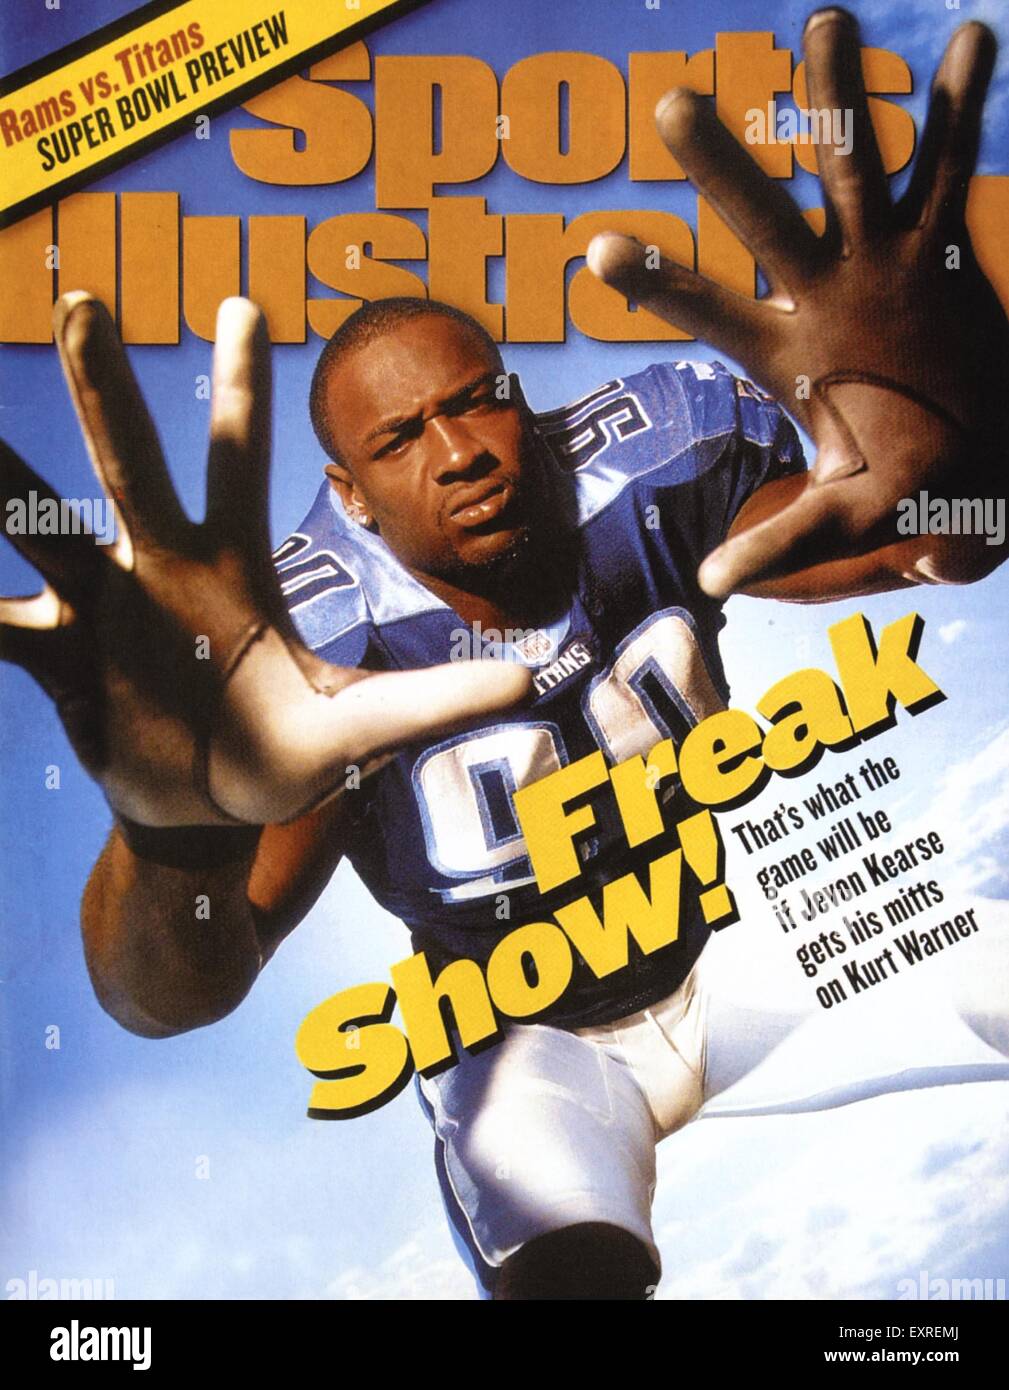 1990s USA Sports Illustrated Magazine Cover Stock Photo